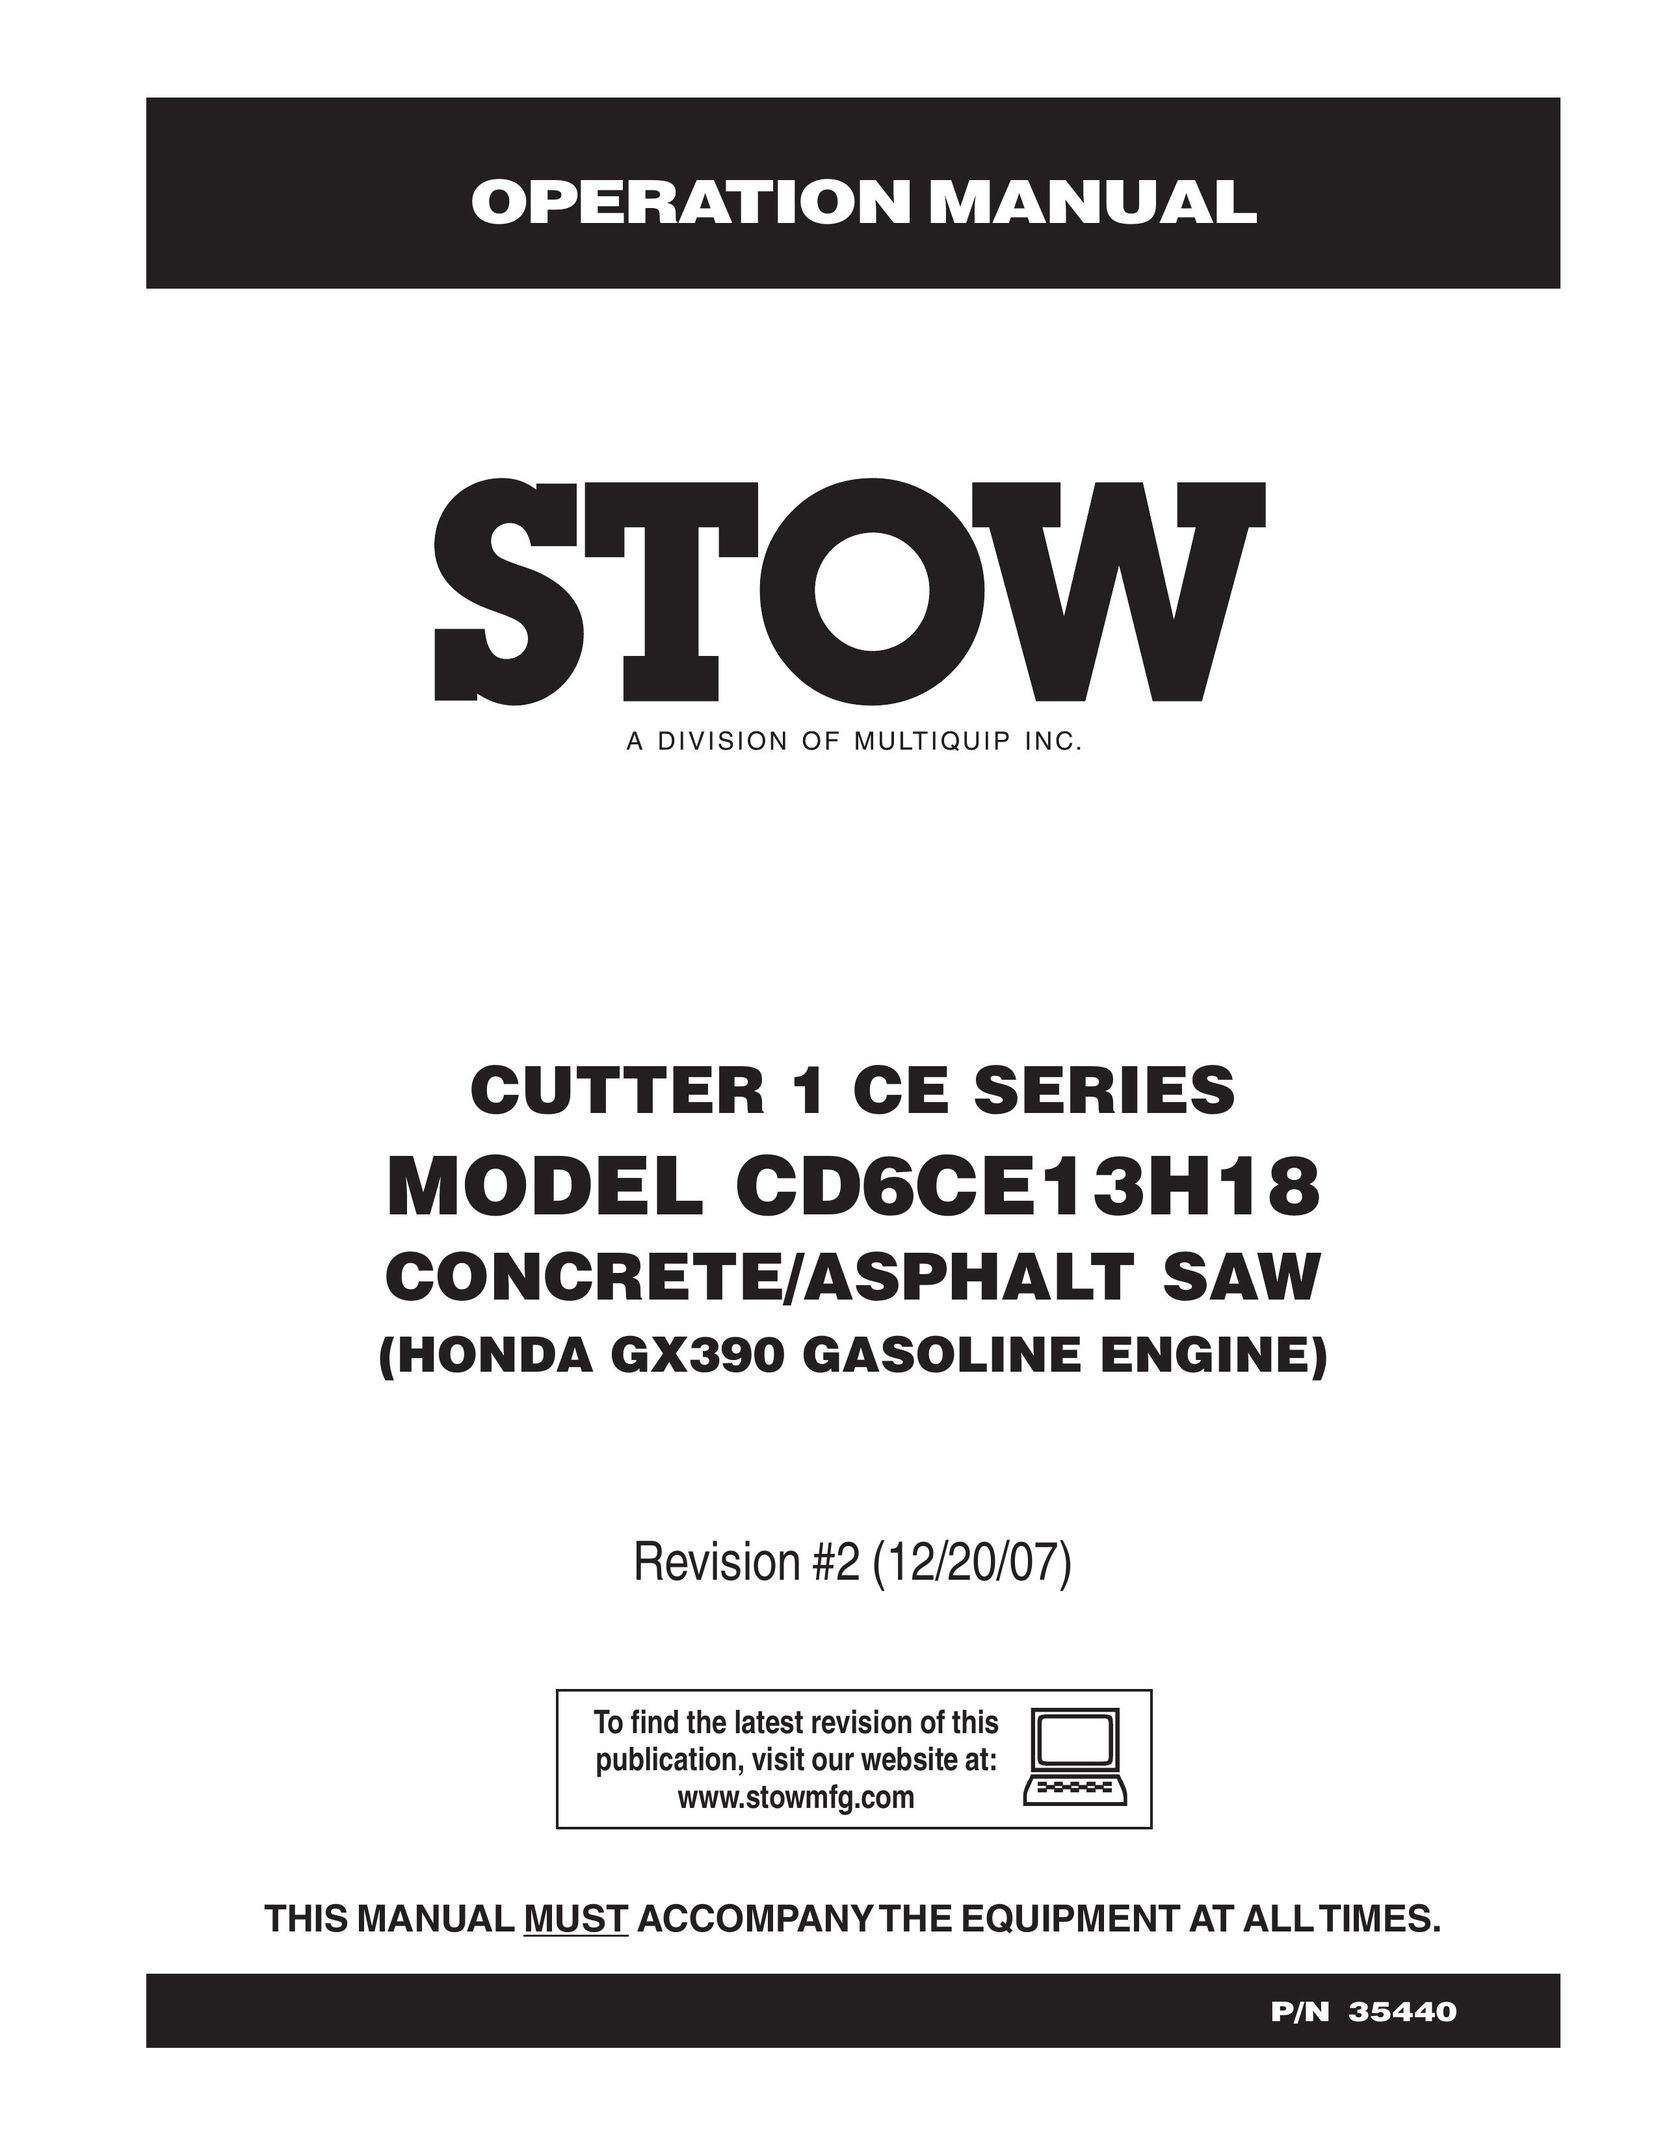 Stow CD6CE13H18 Saw User Manual